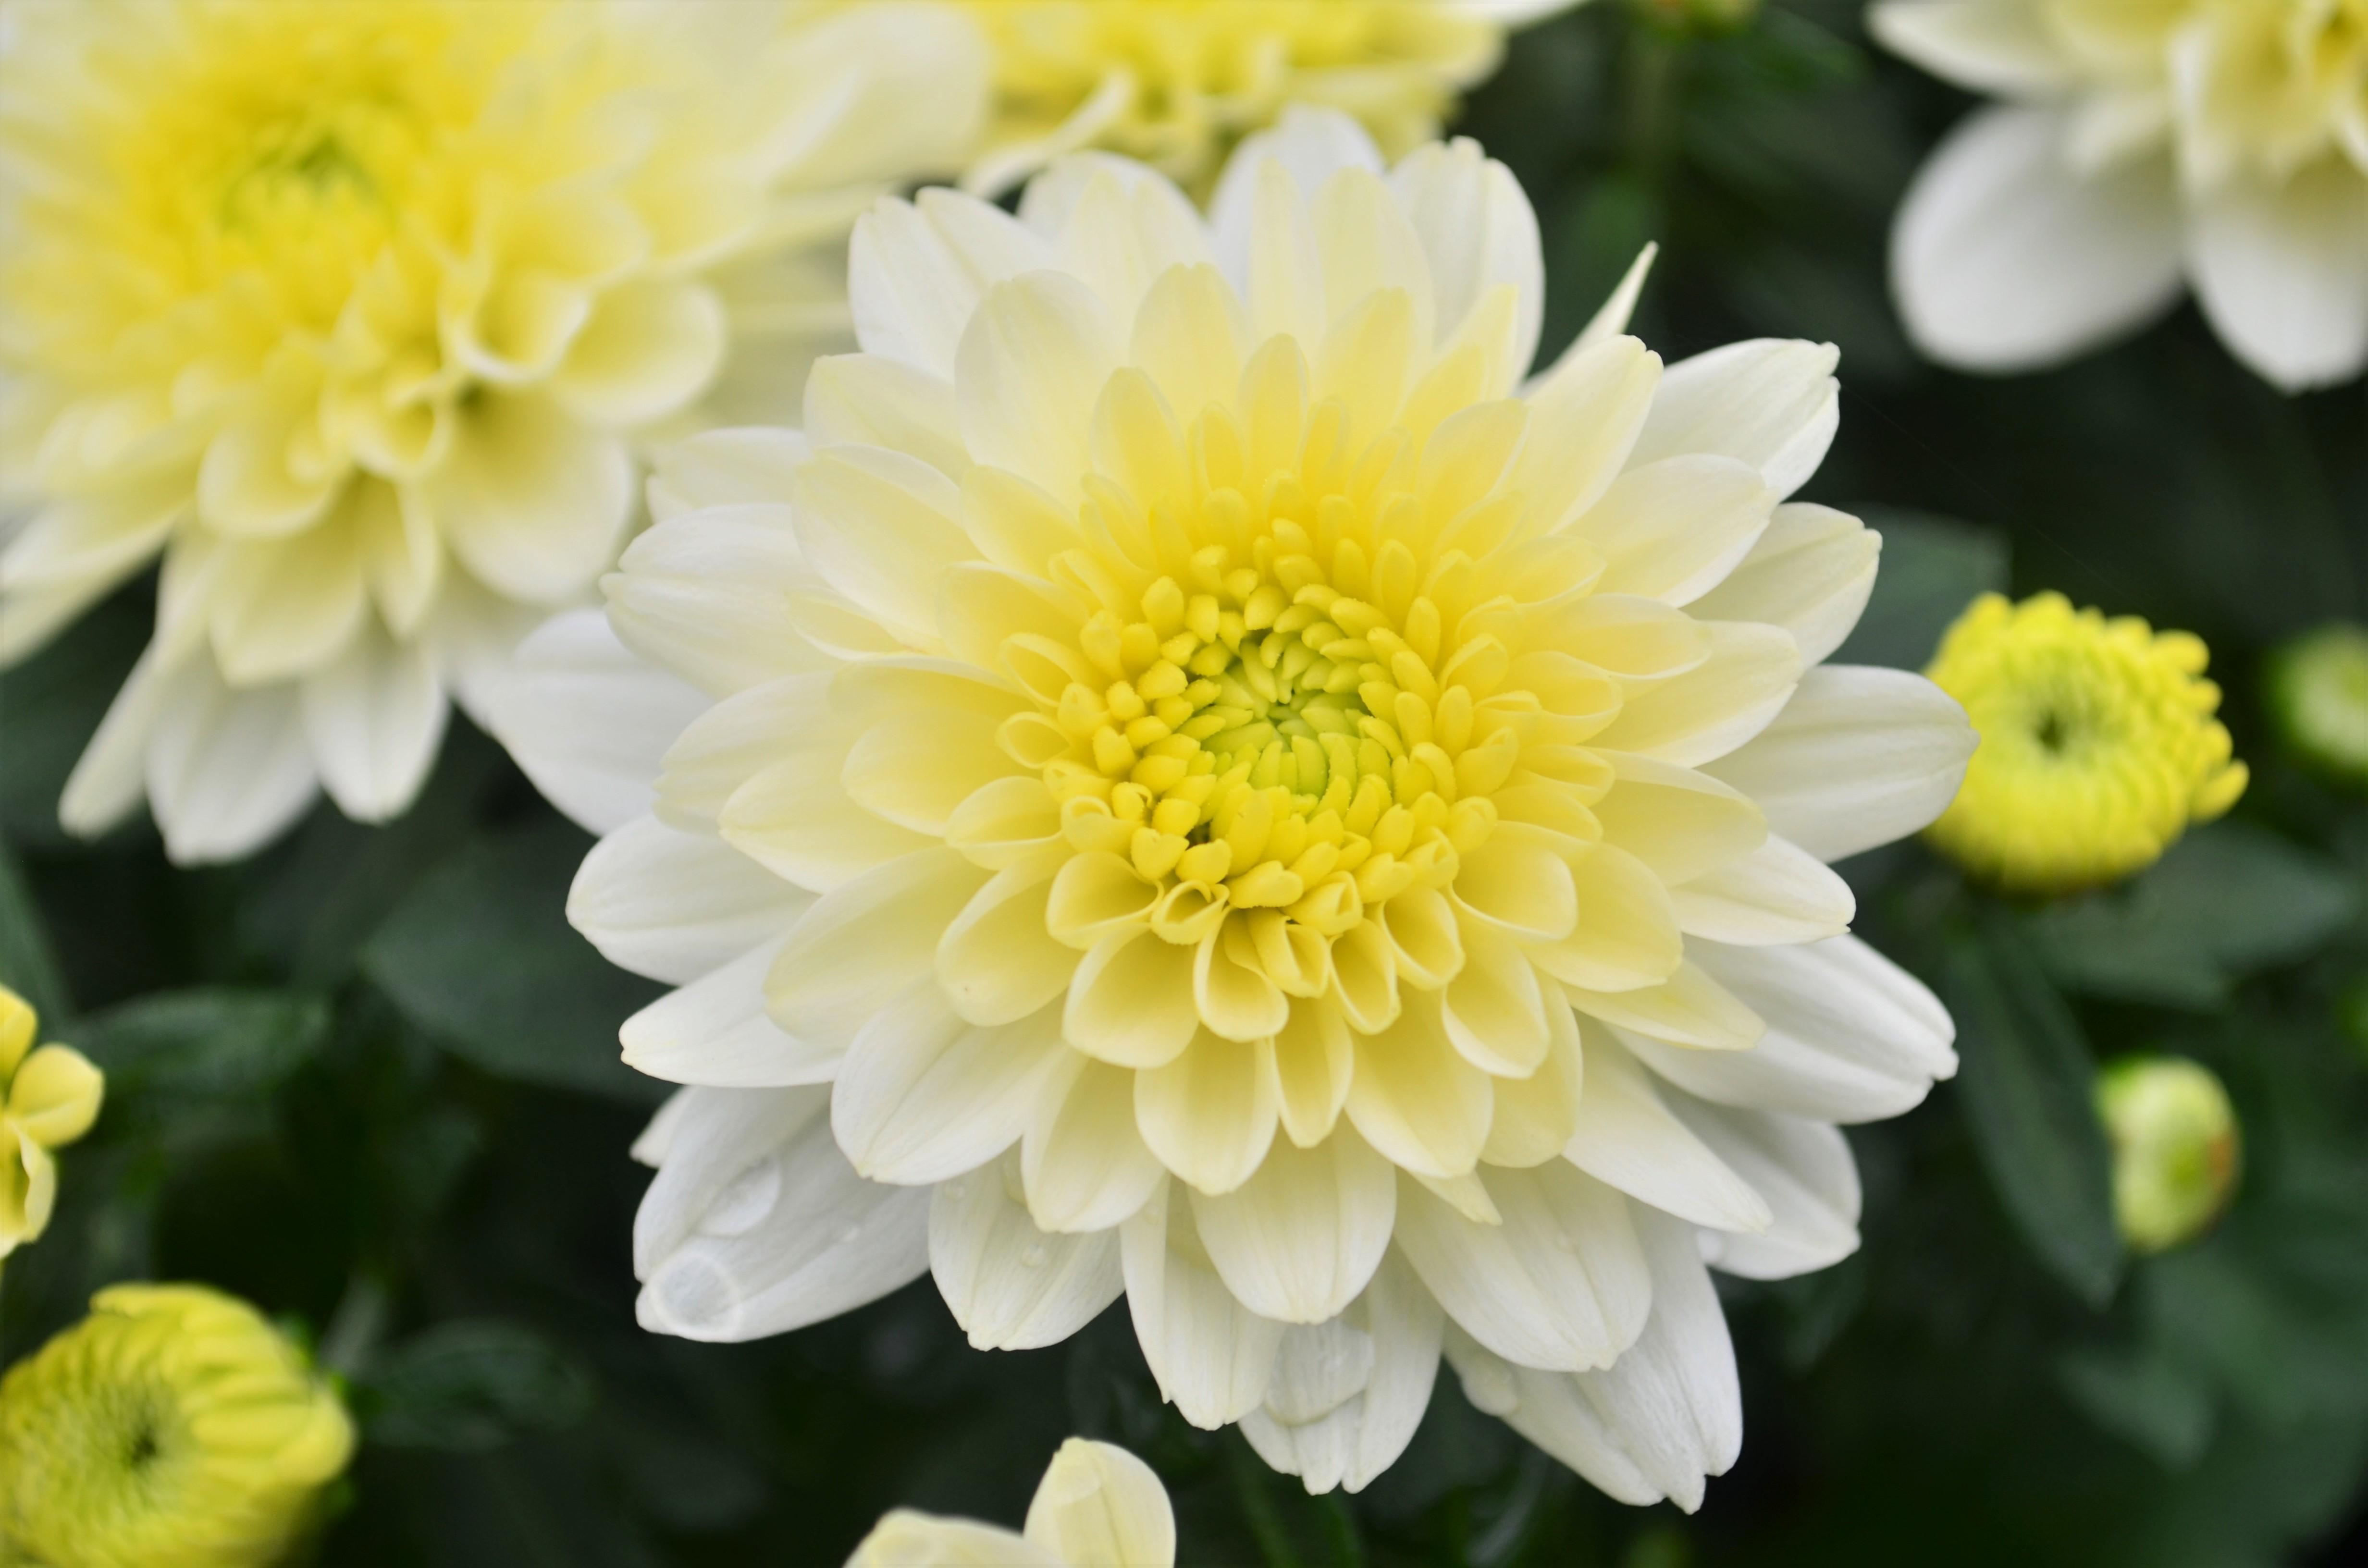 Chrysanthemum Fonti 'White' - Mum from Hillcrest Nursery